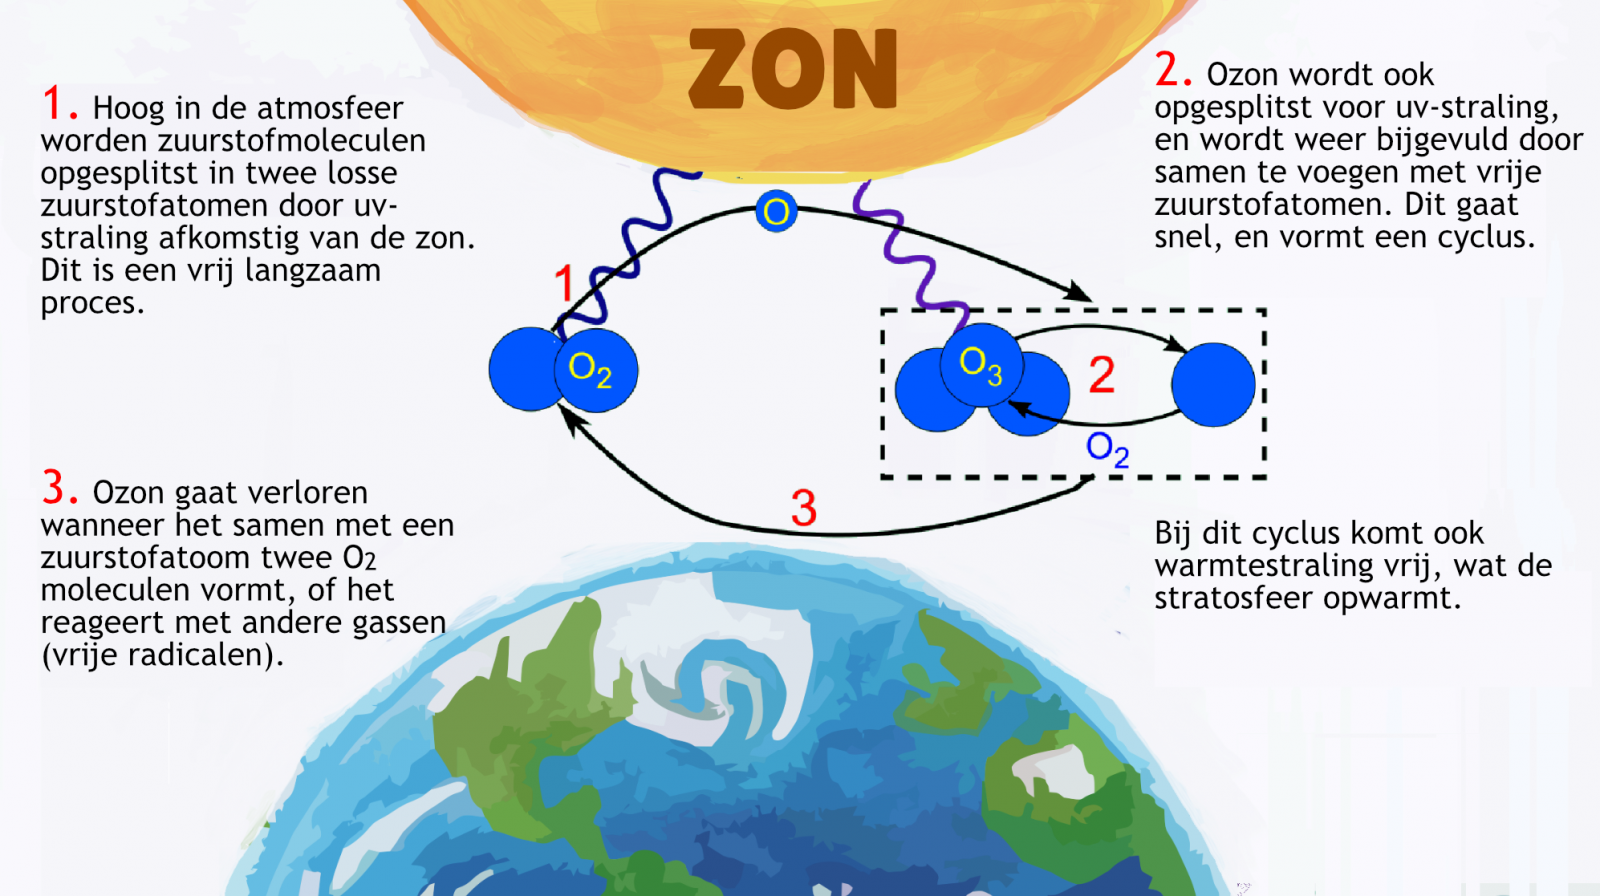 Ozoncyclus